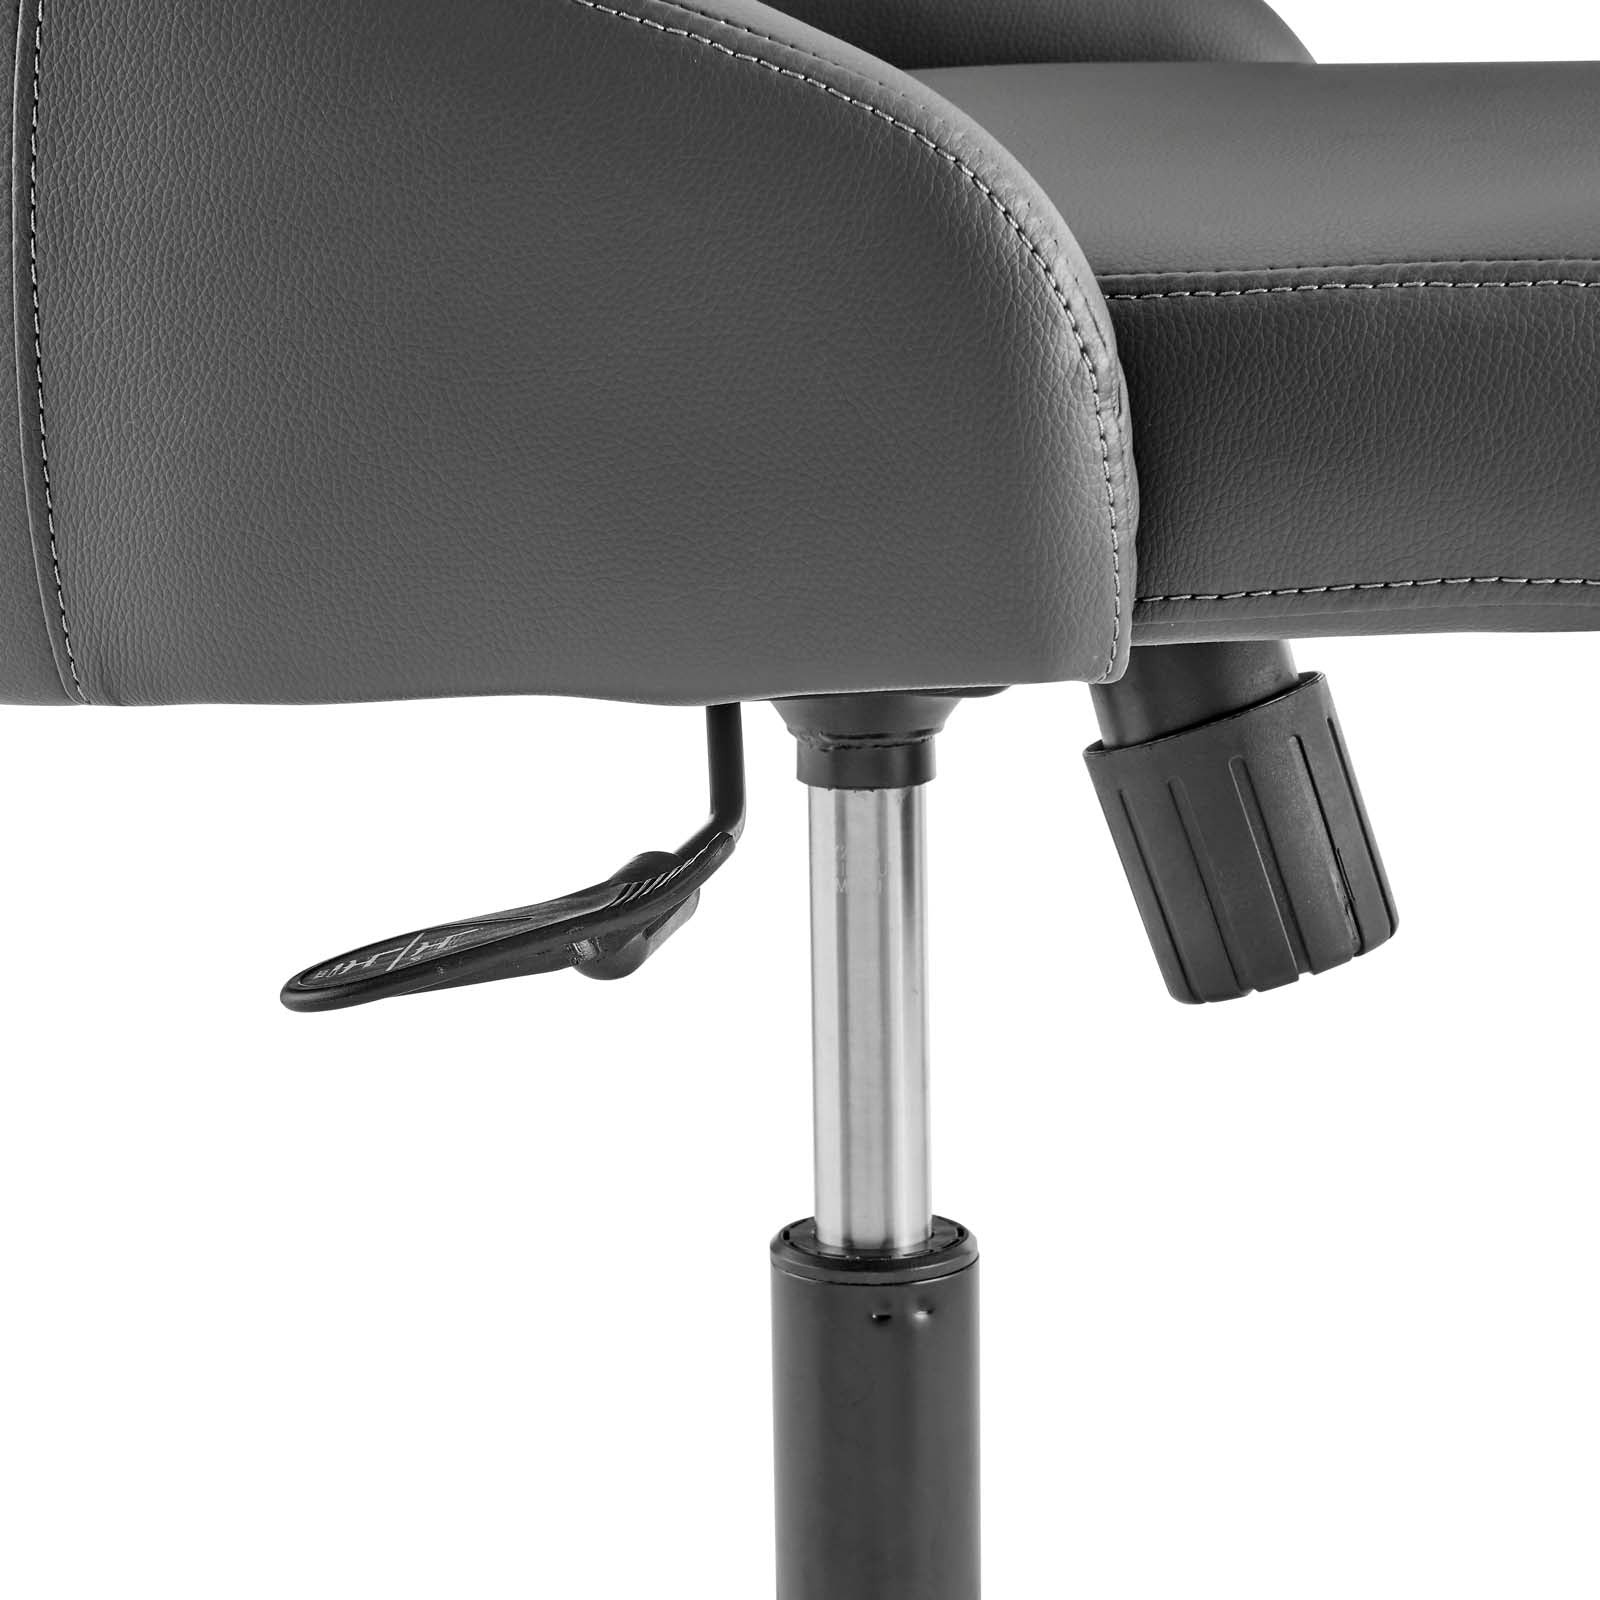 Modway Task Chairs - Designate Swivel Vegan Leather Office Chair Black Gray